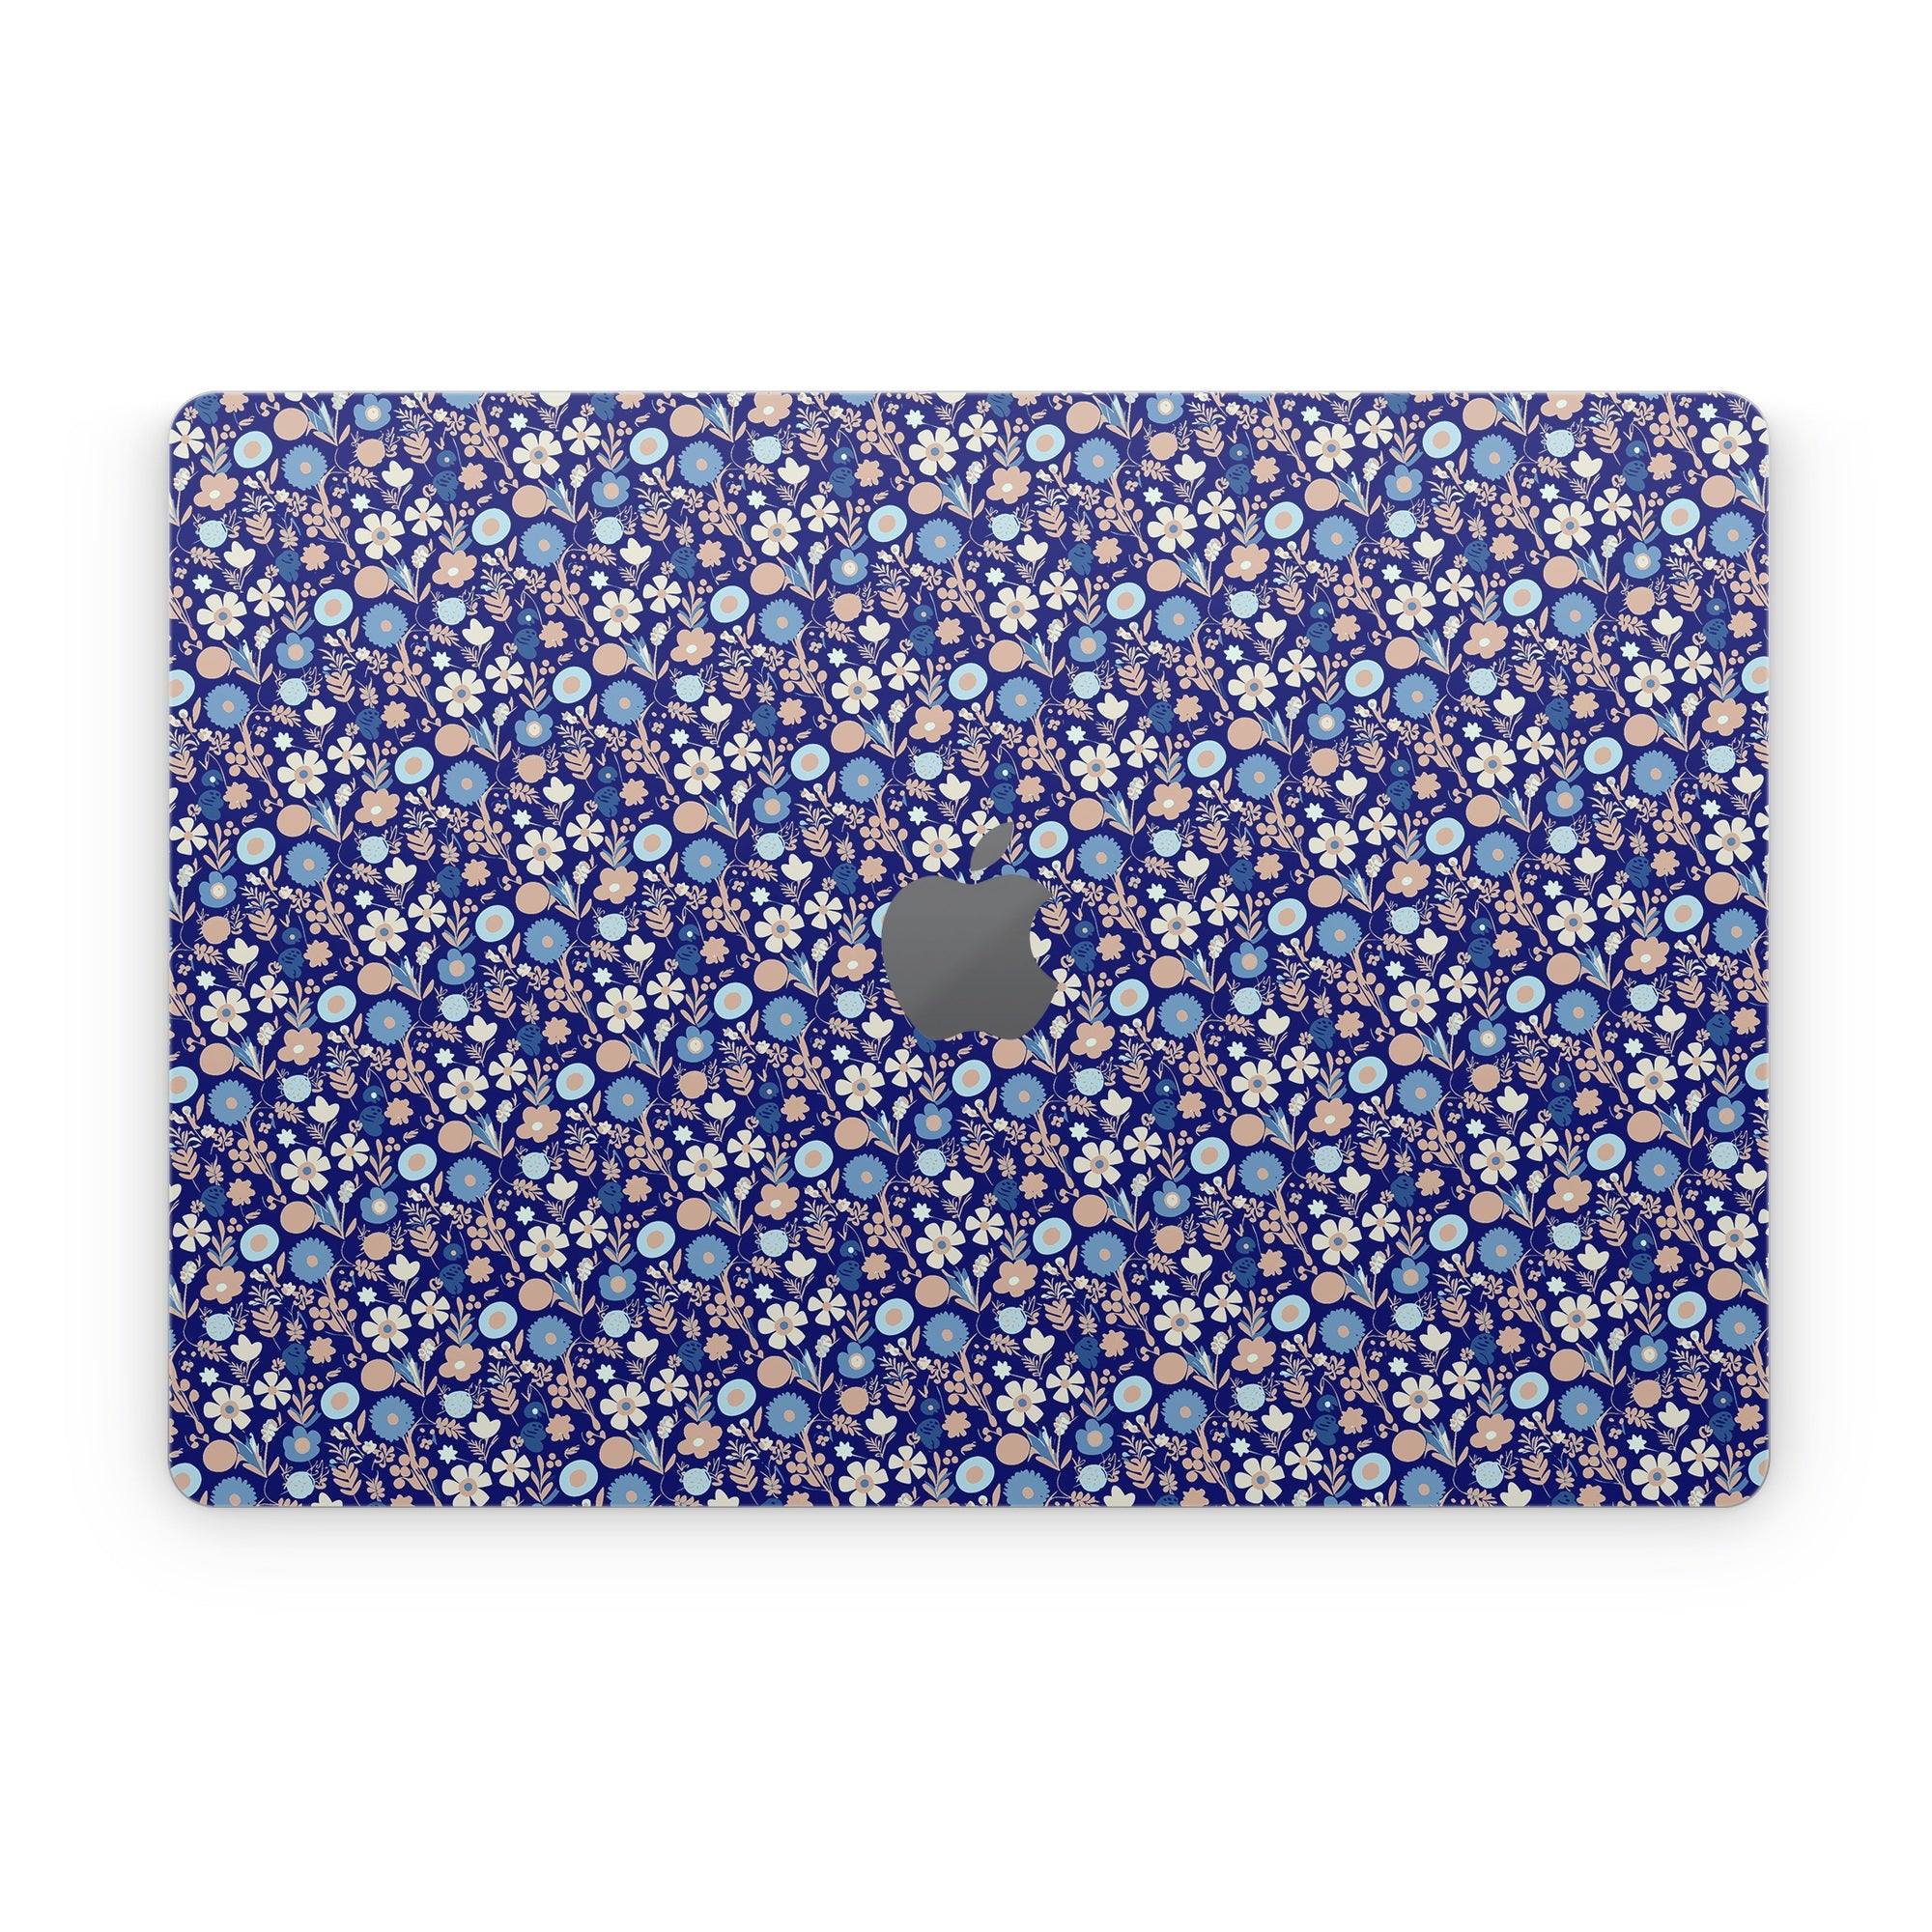 Mary - Apple MacBook Skin